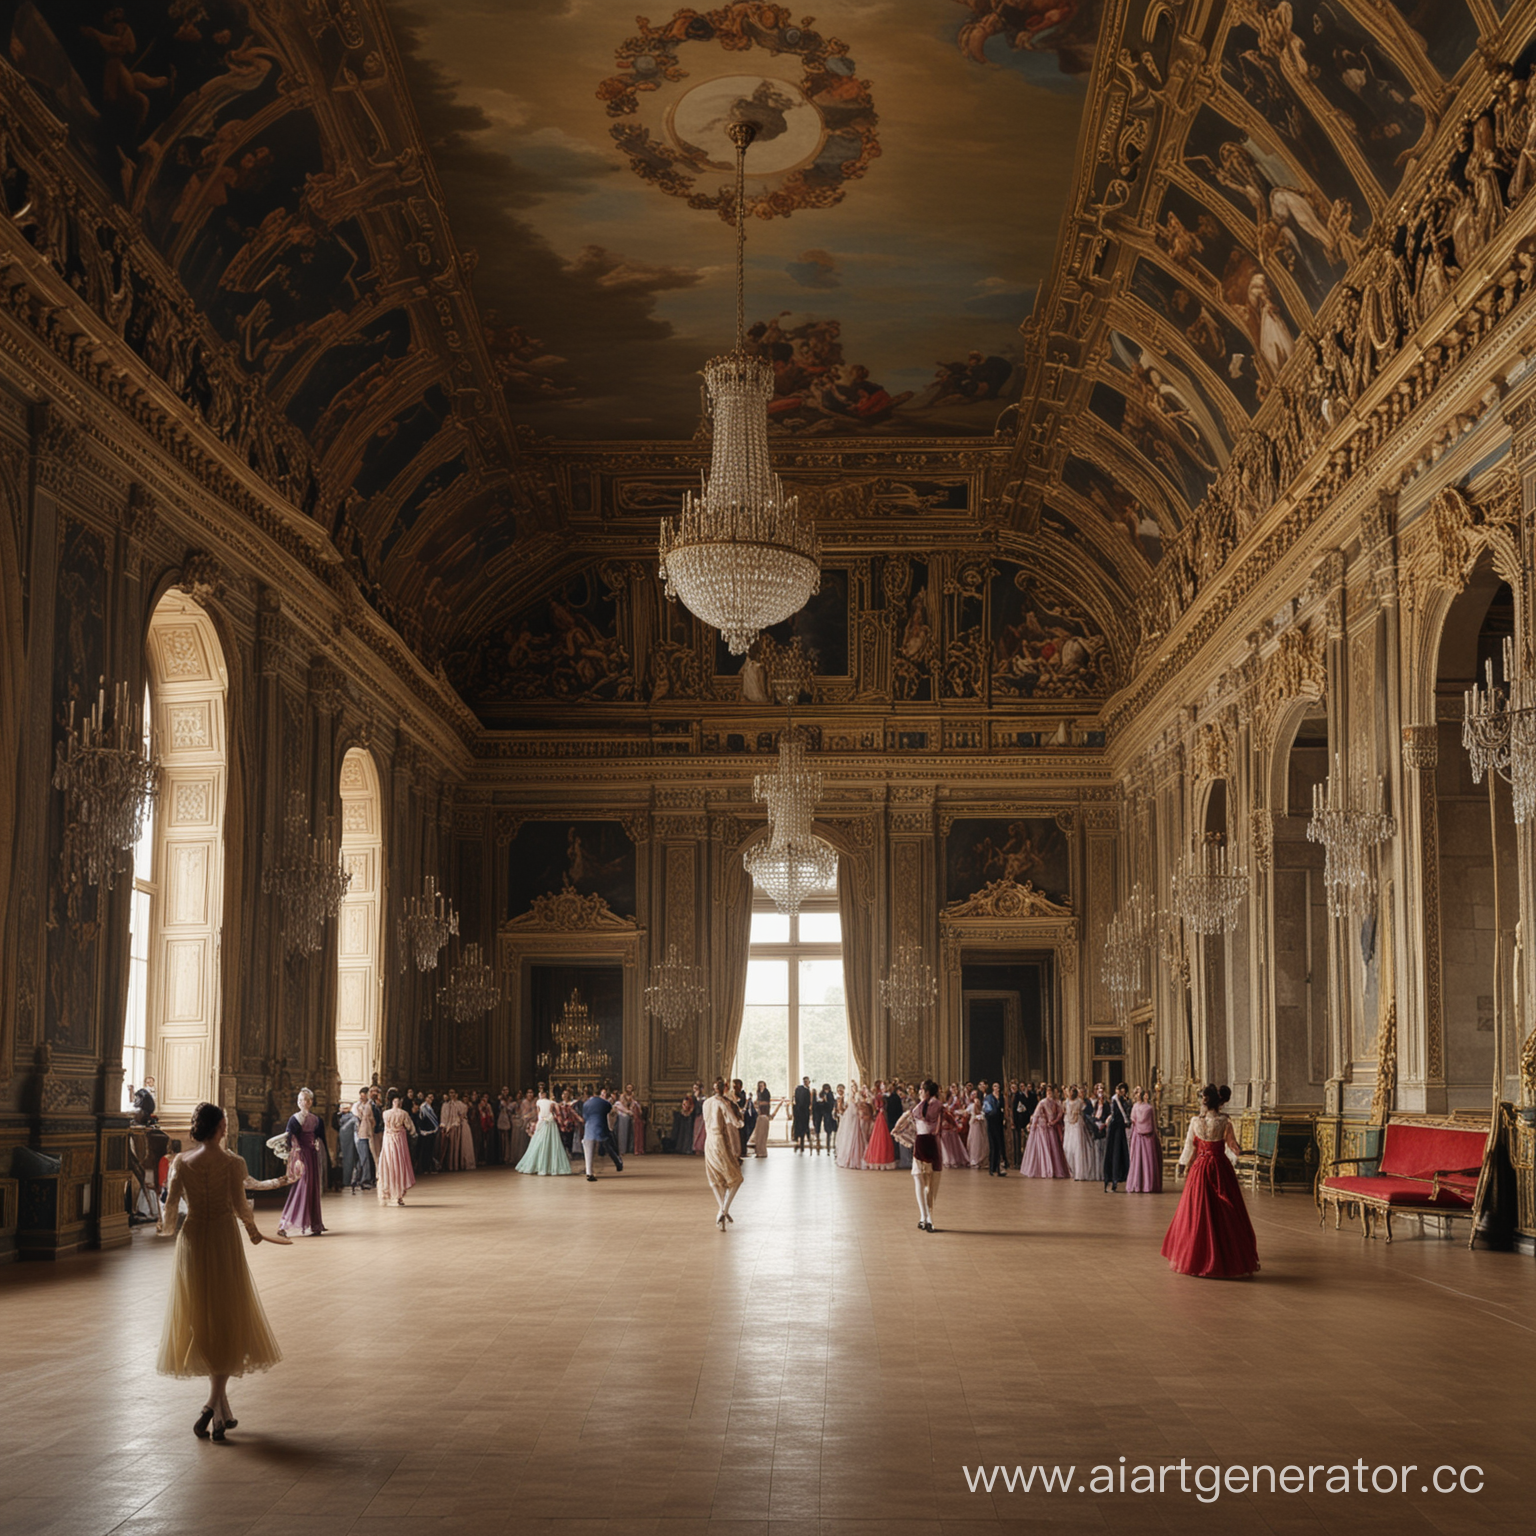 дворцовый интерьер, танцы, бал